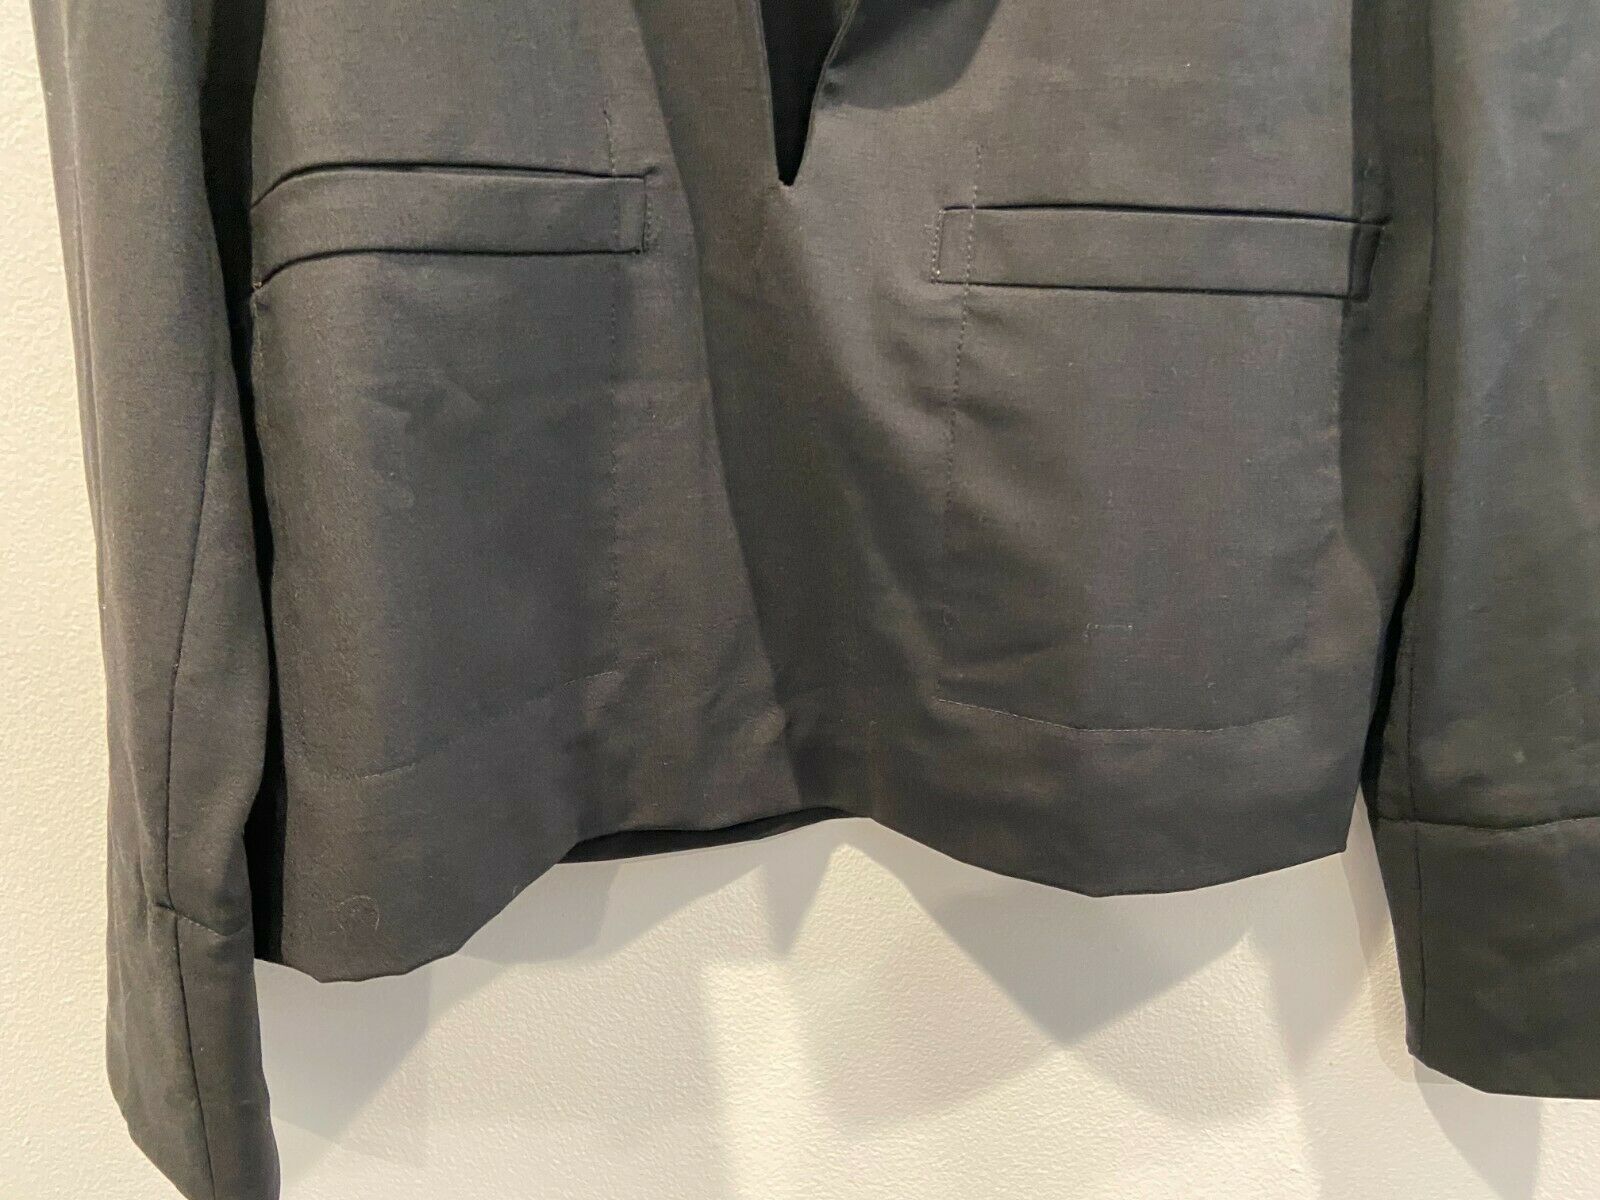 Authentic John Bartlett Pullover Shirt Jacket